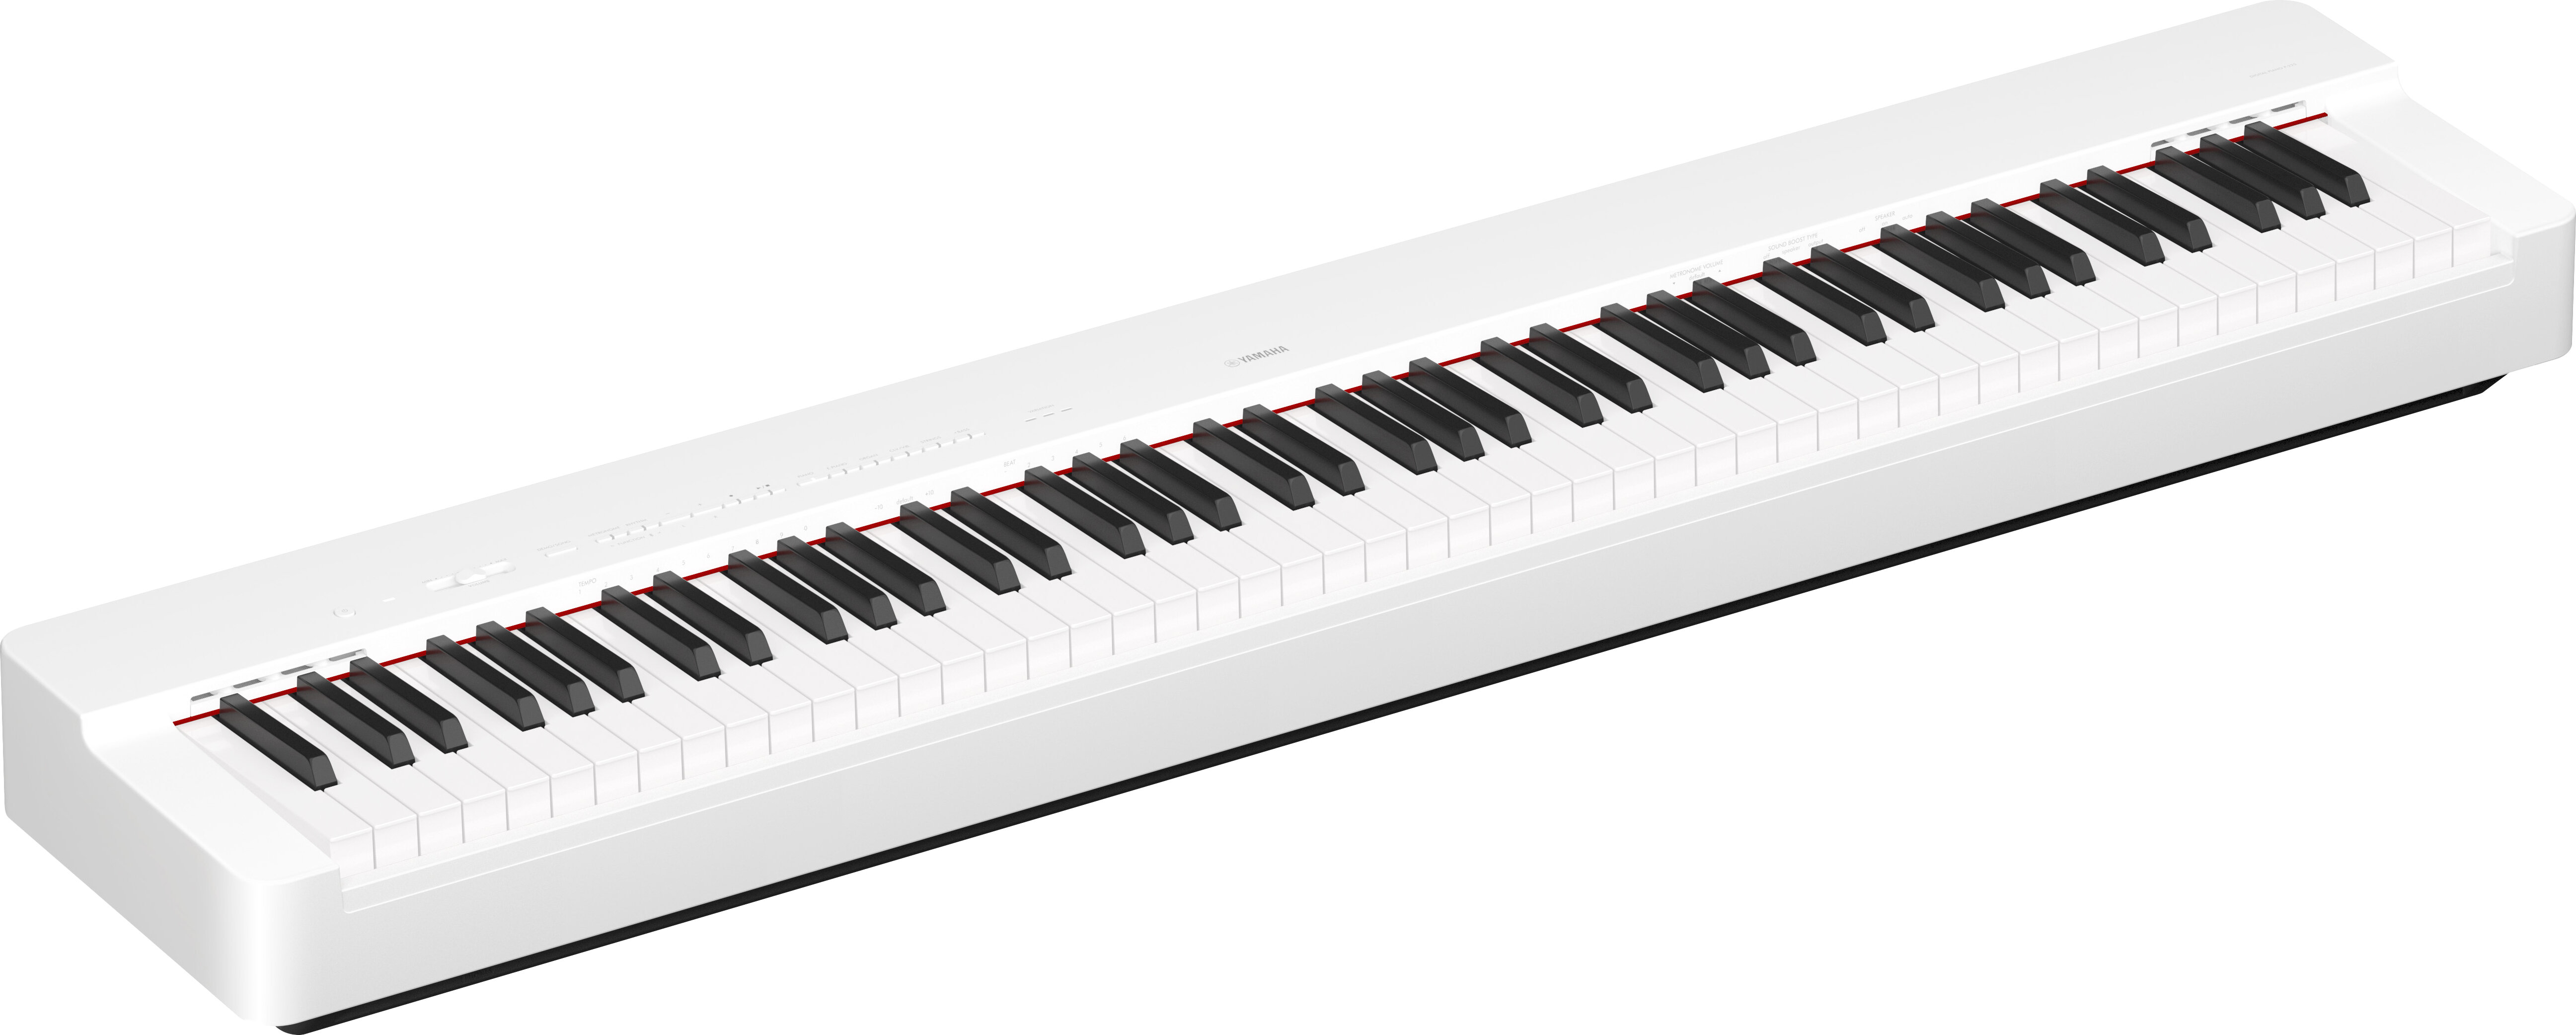 Yamaha P225 88 Key Digital Piano in White -  P225WH